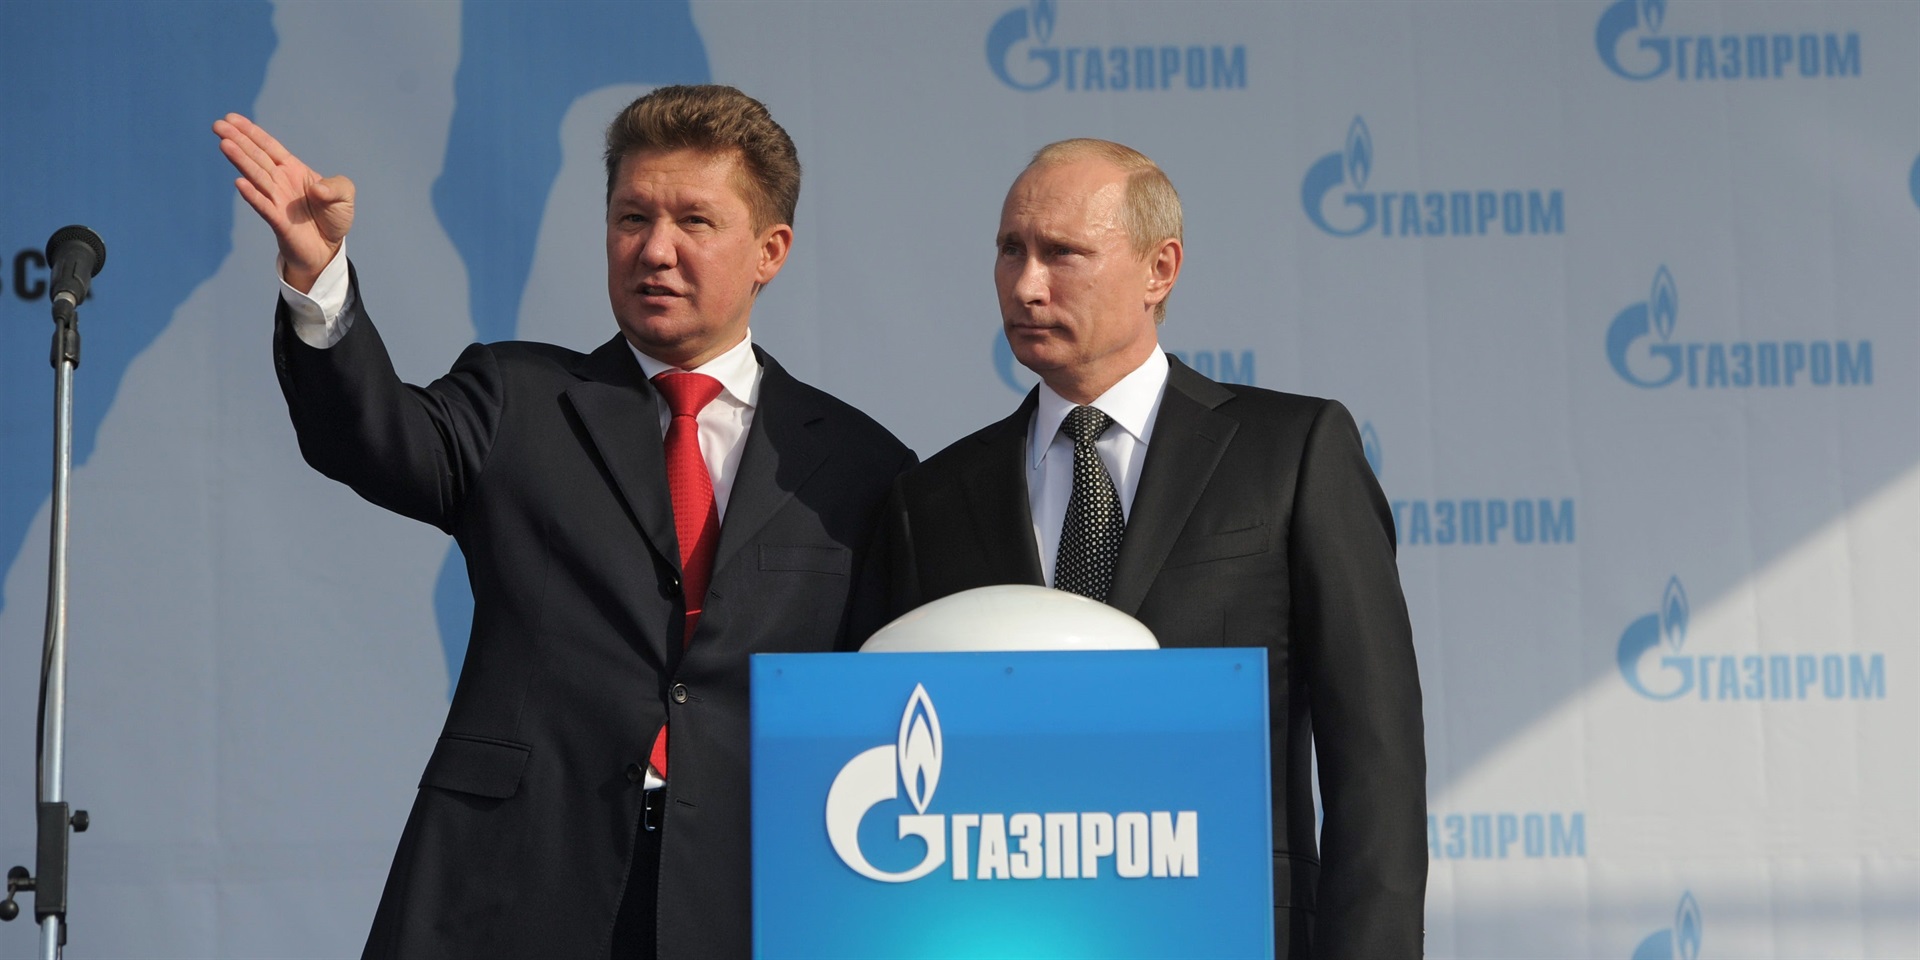 Gazprom CEO Alexey Miller stands next to Russian President Vladimir Putin.